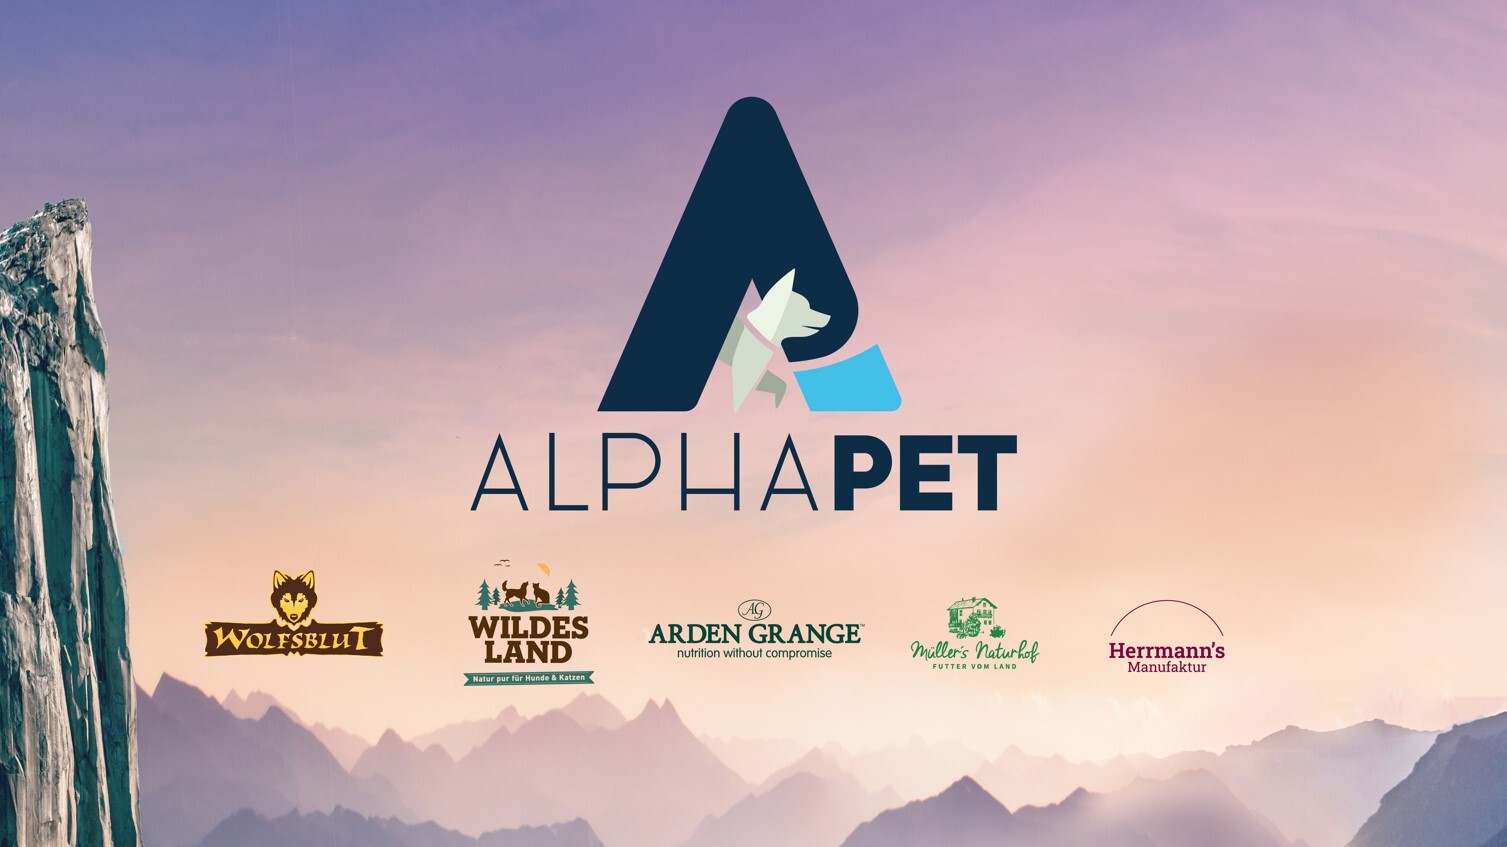 Big AlphaPet logo with AlphaPet brand logos below